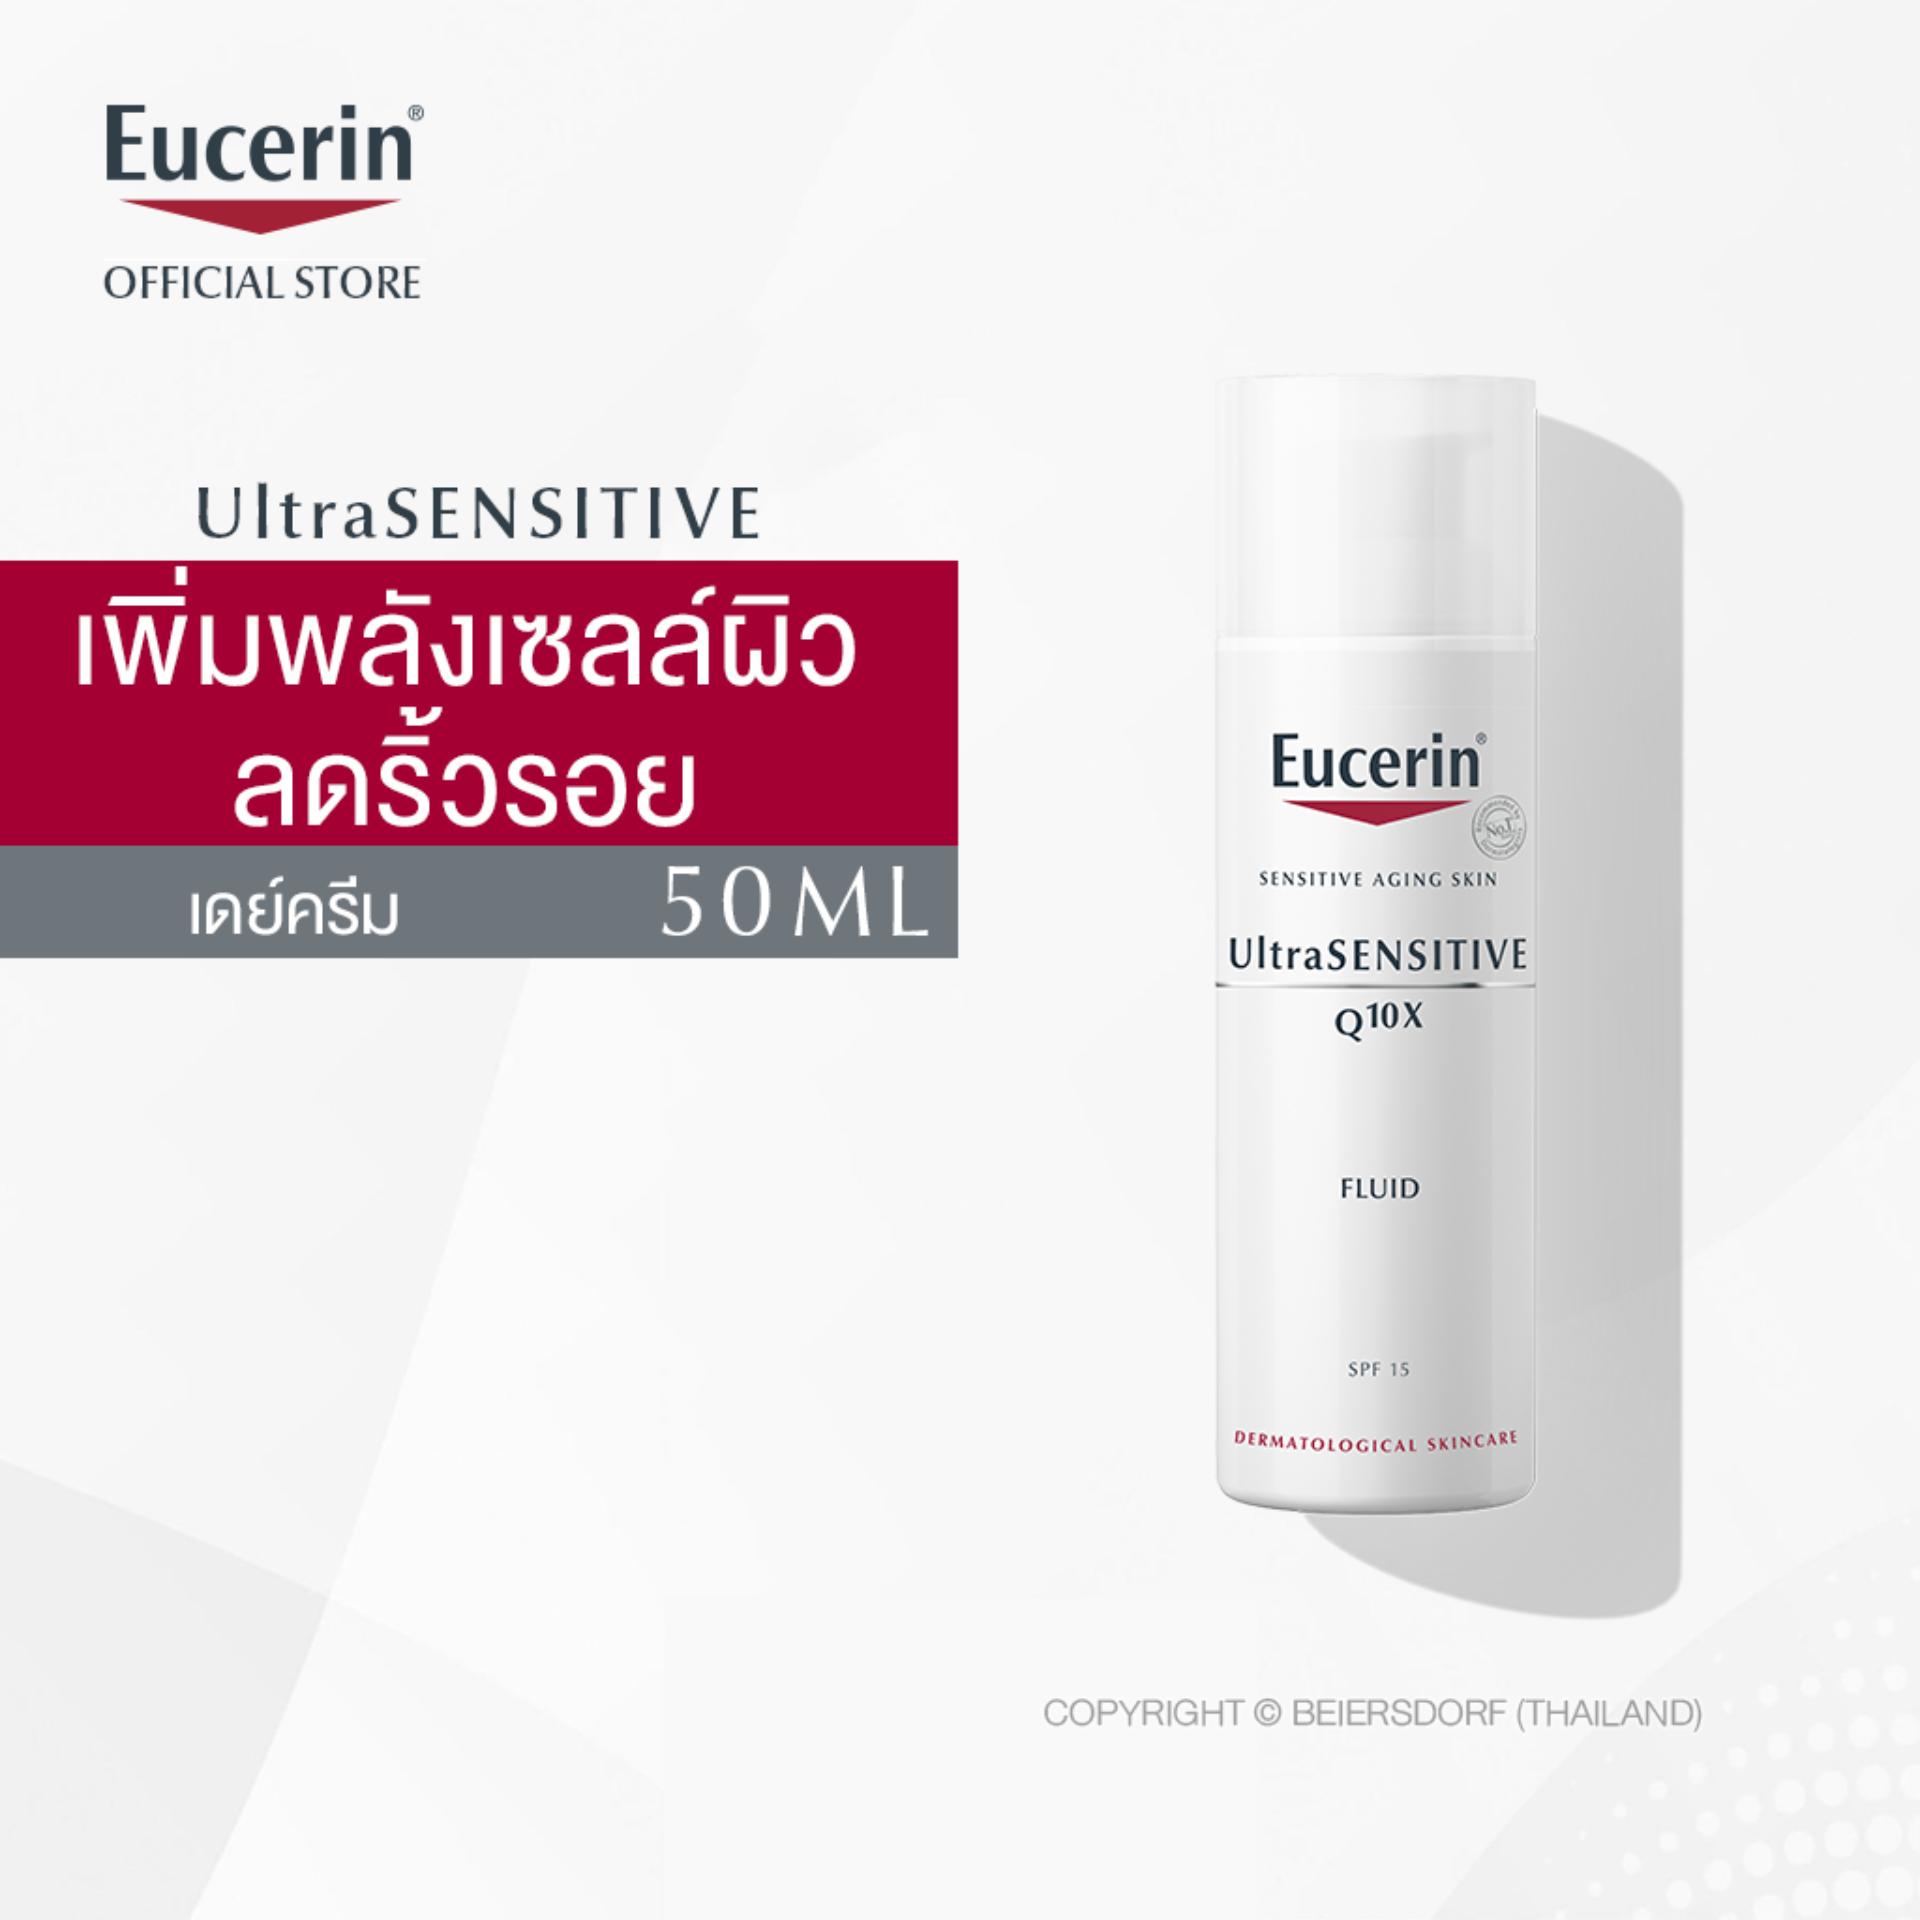 Eucerin UltraSENSITIVE Q10X Fluid 50ml ยูเซอริน อัลตร้าเซ็นซิทีฟ คิวเท็นเอ็กซ์ ครีมบำรุงผิวเนื้อฟลูอิดบางเบา สูตรกลางวัน เพื่อผิวบอบบางแพ้ง่าย 50มล